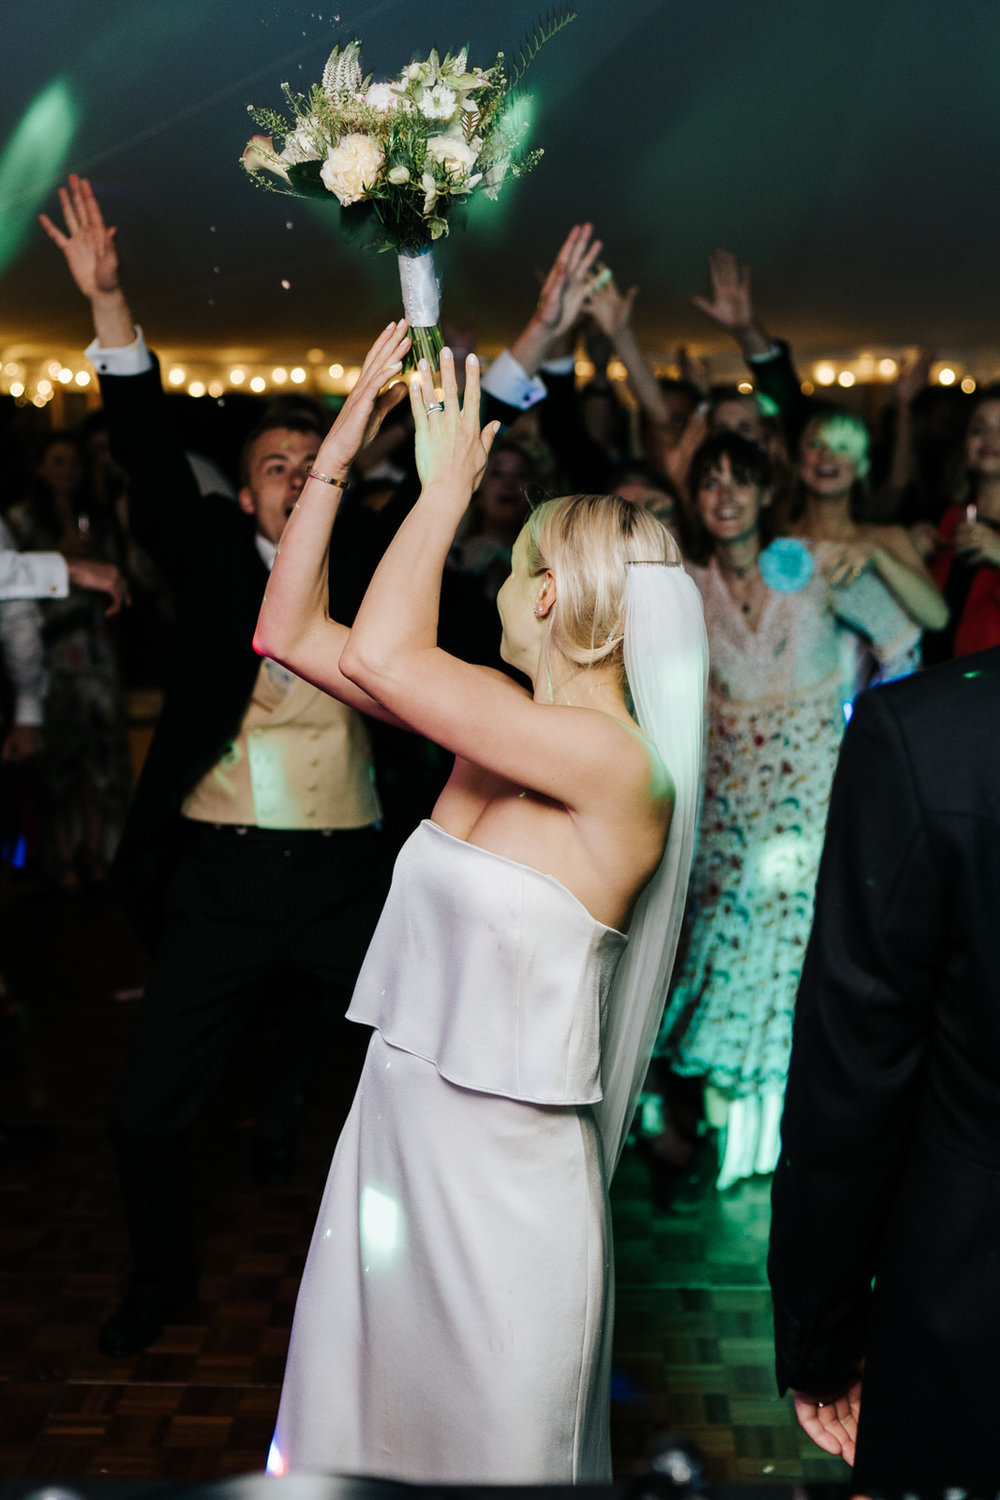  Bride throws bouquet into crowd of keen guests on the dancefloor 